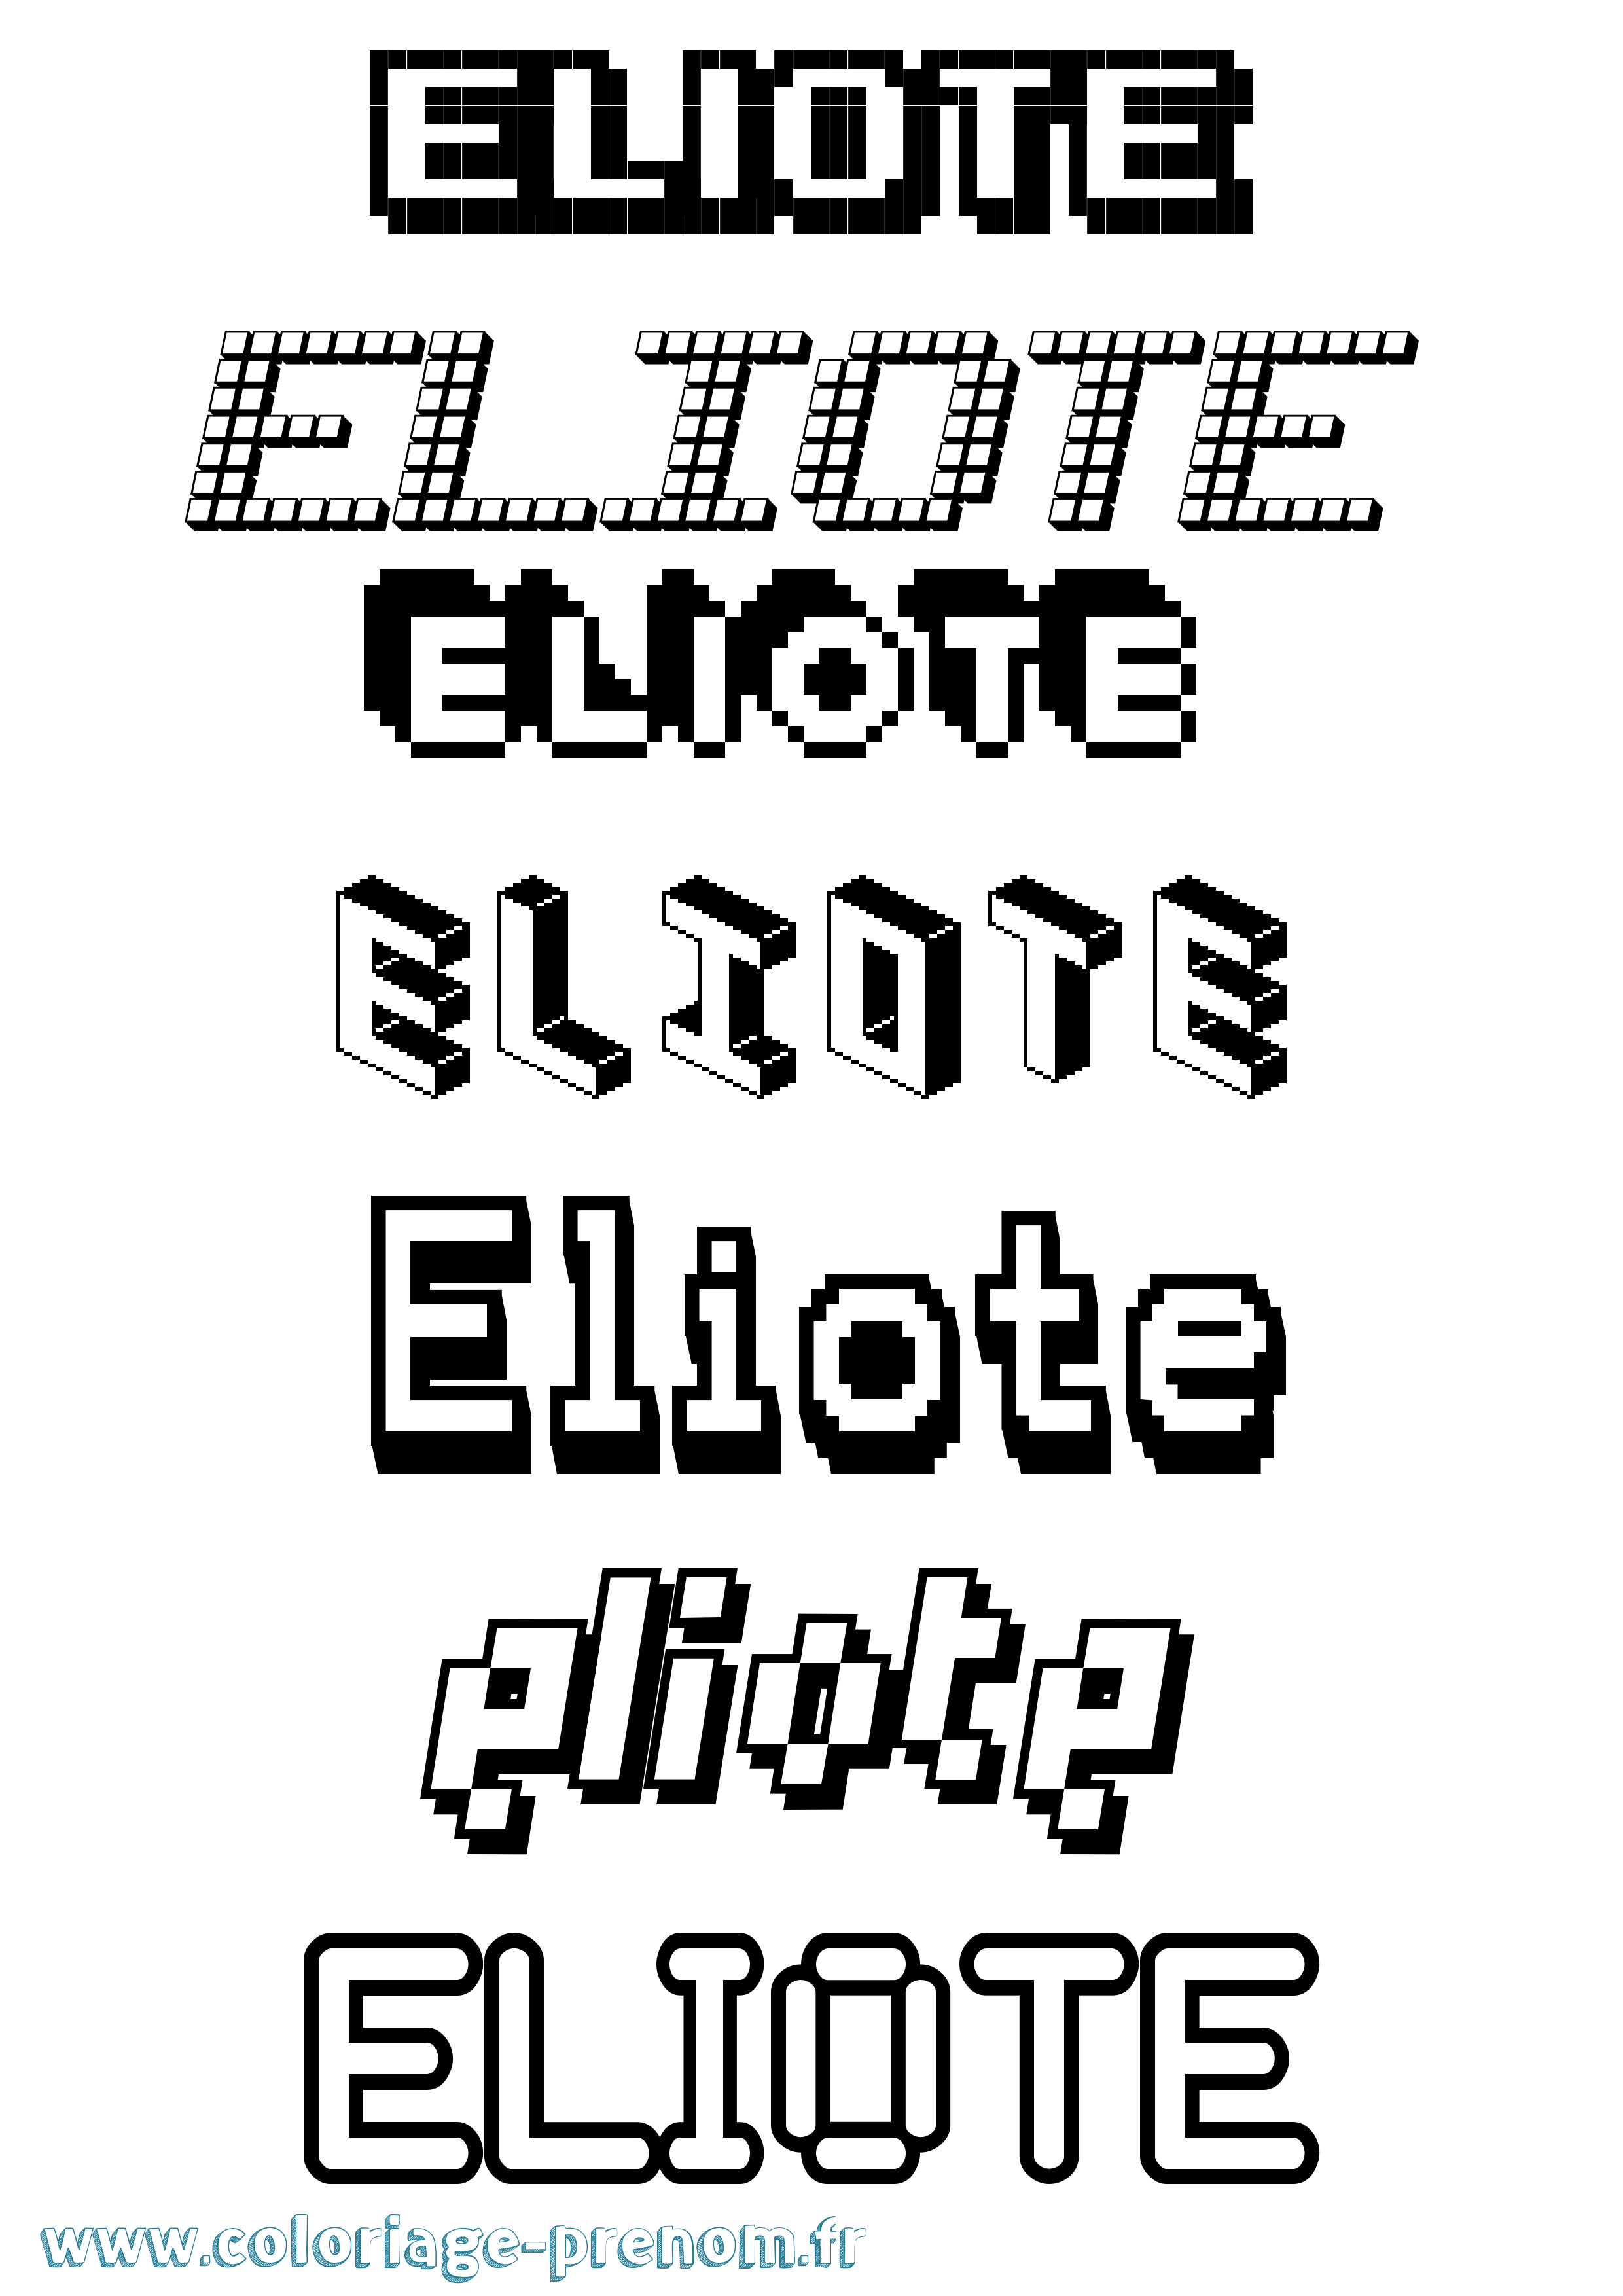 Coloriage prénom Eliote Pixel